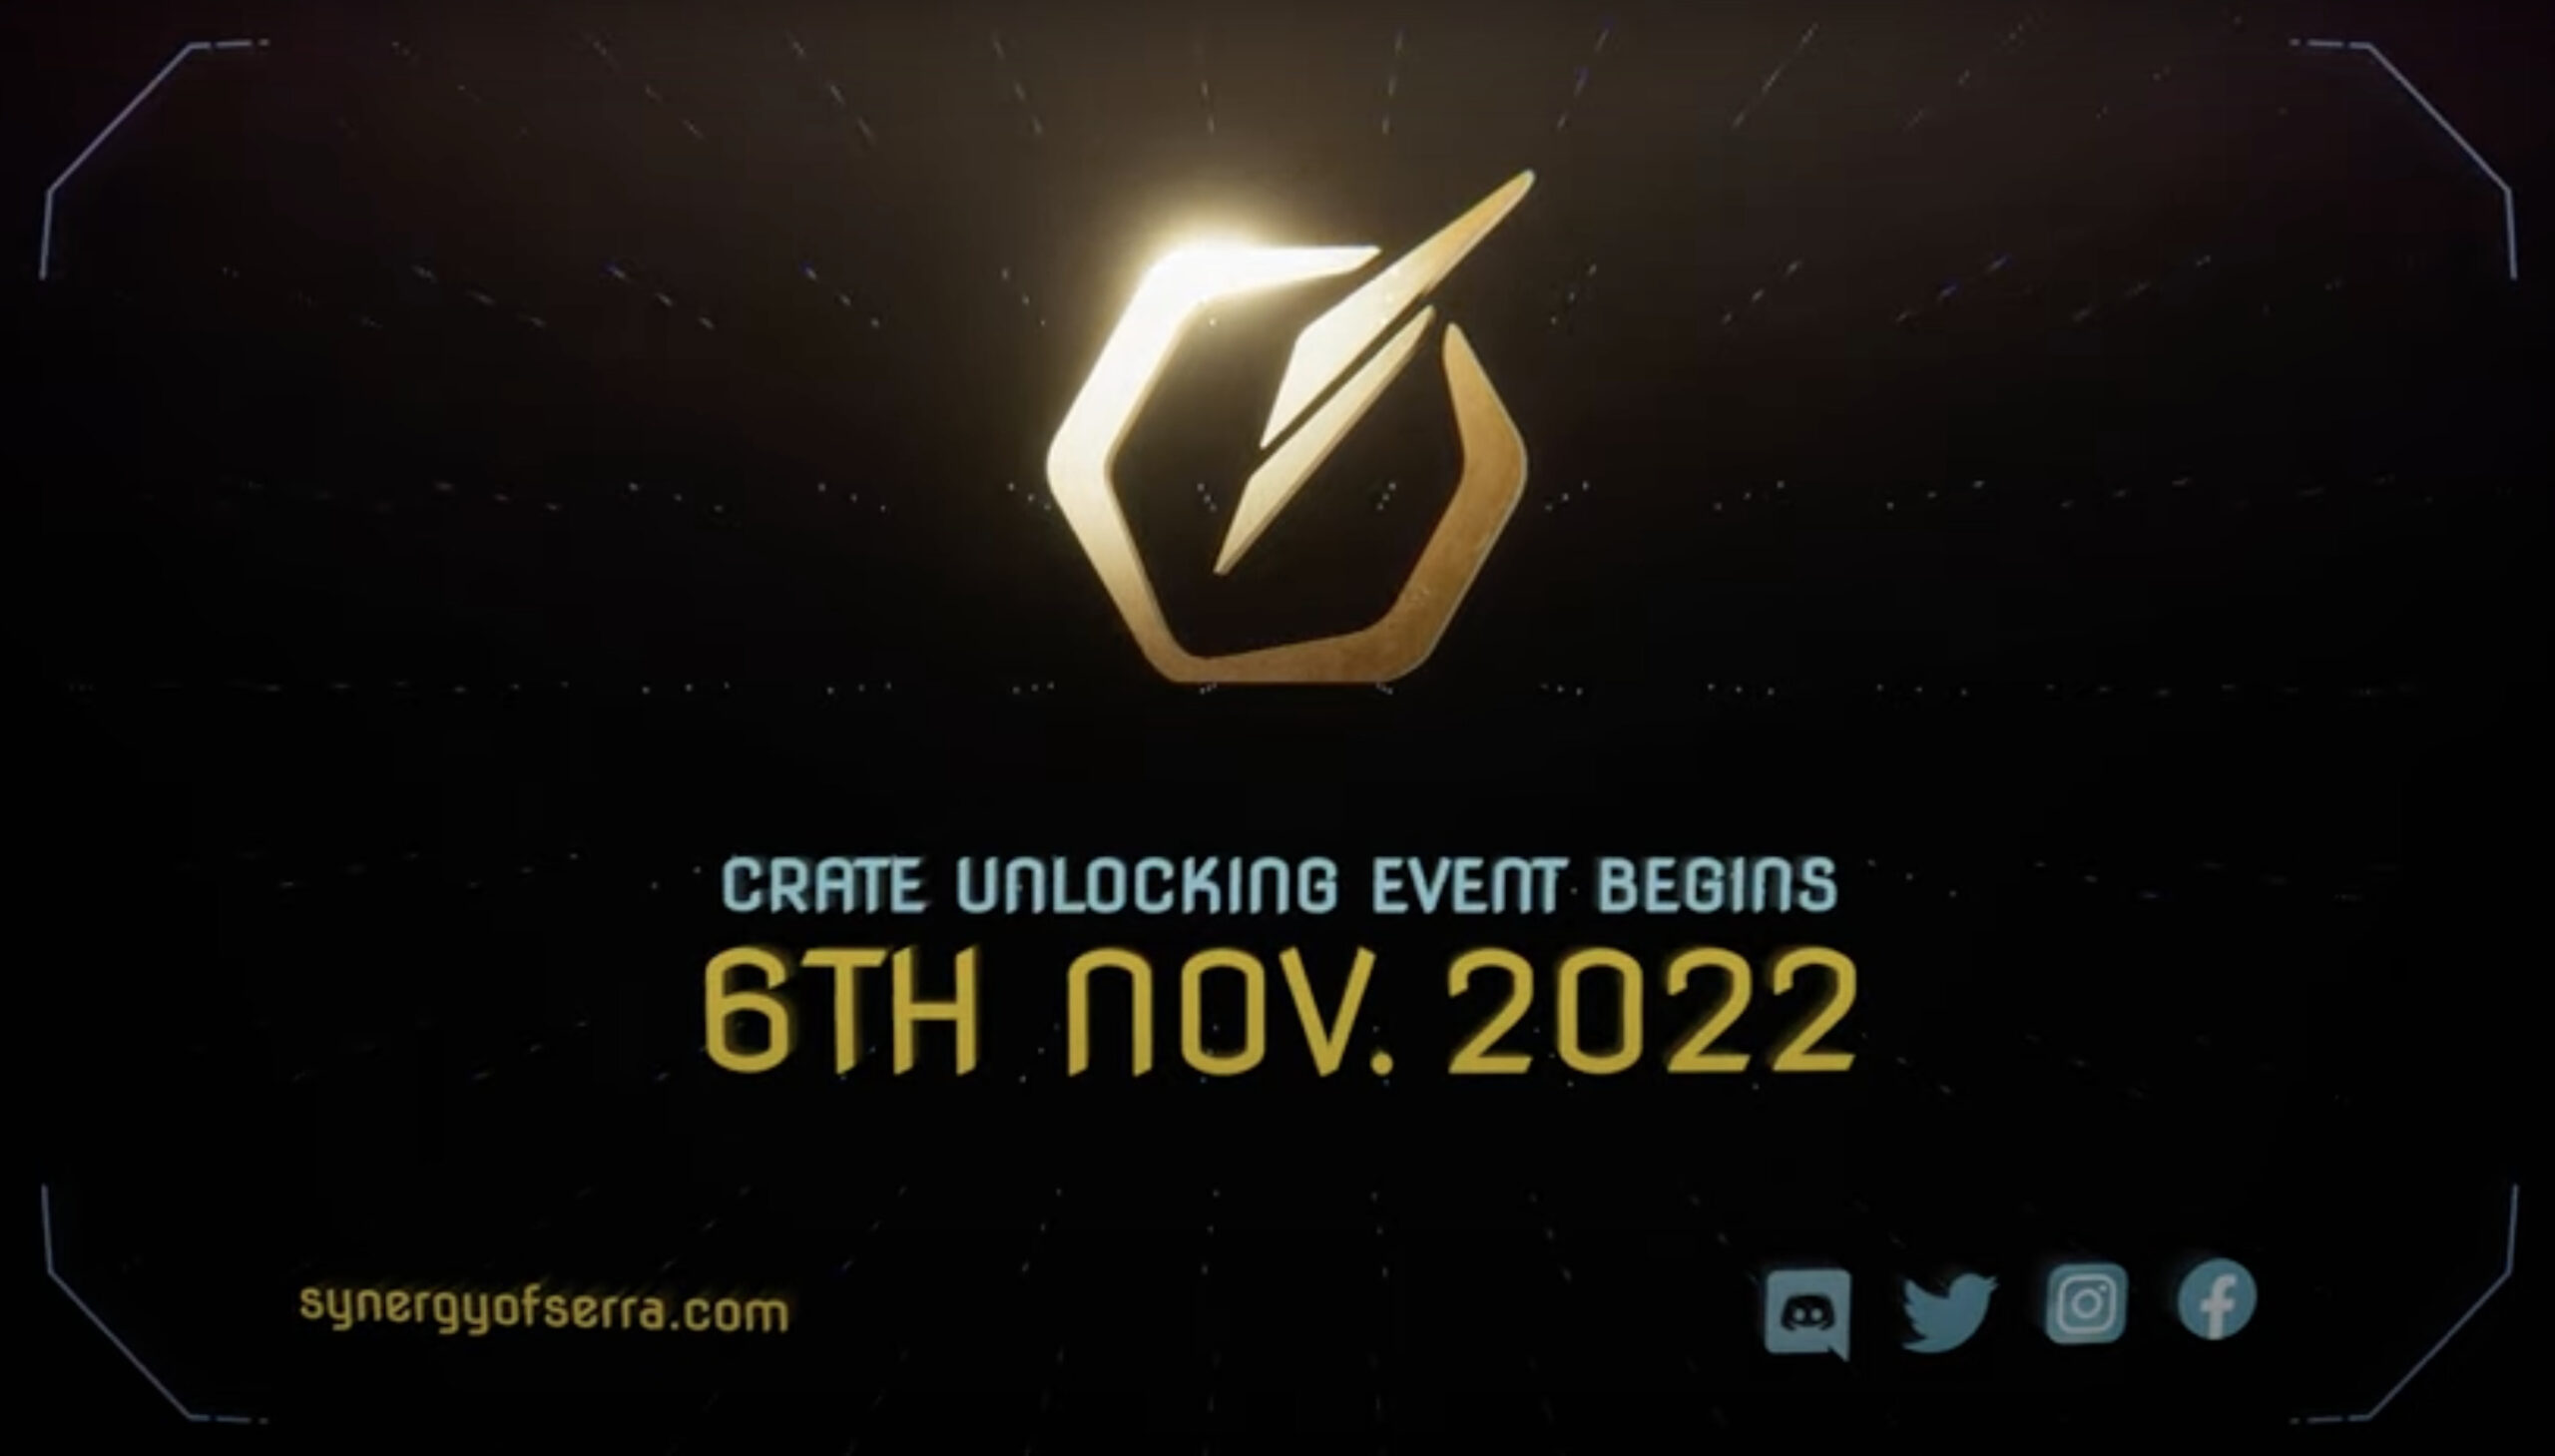 Synergy of Serra unlocking event